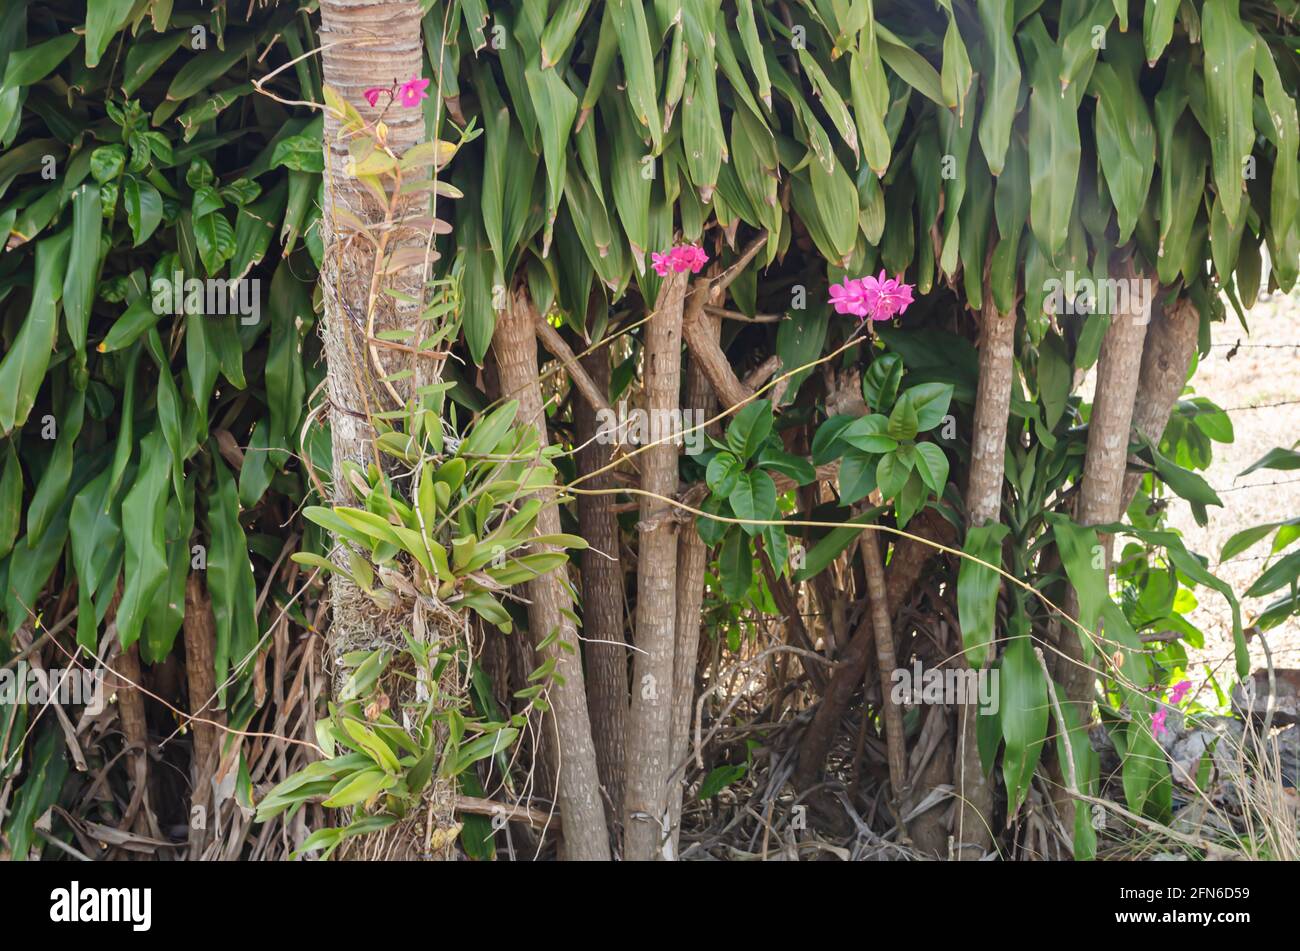 Native Jamaican Broughtonia Sanguinea Orchid On Palm Tree Stock Photo